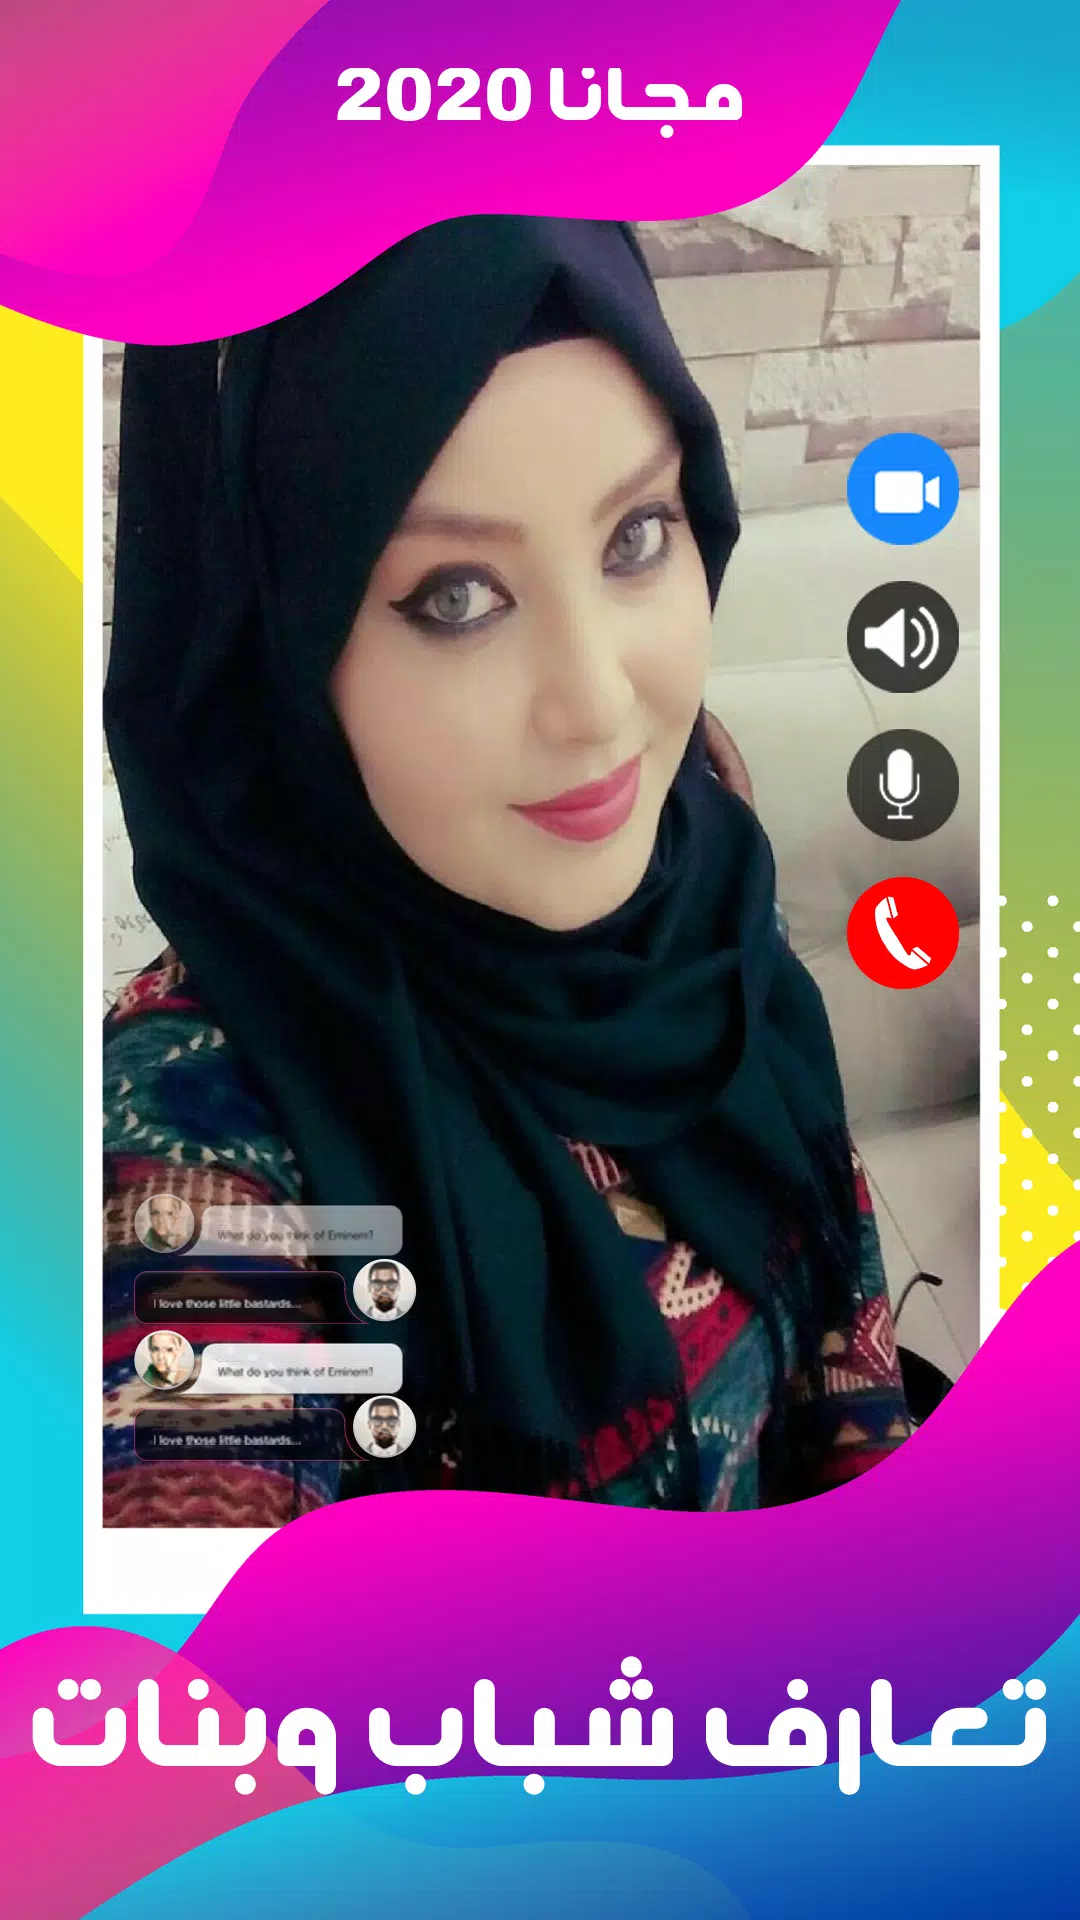 Dardachni تعارف و دردشة بنات العرب APK for Android Download